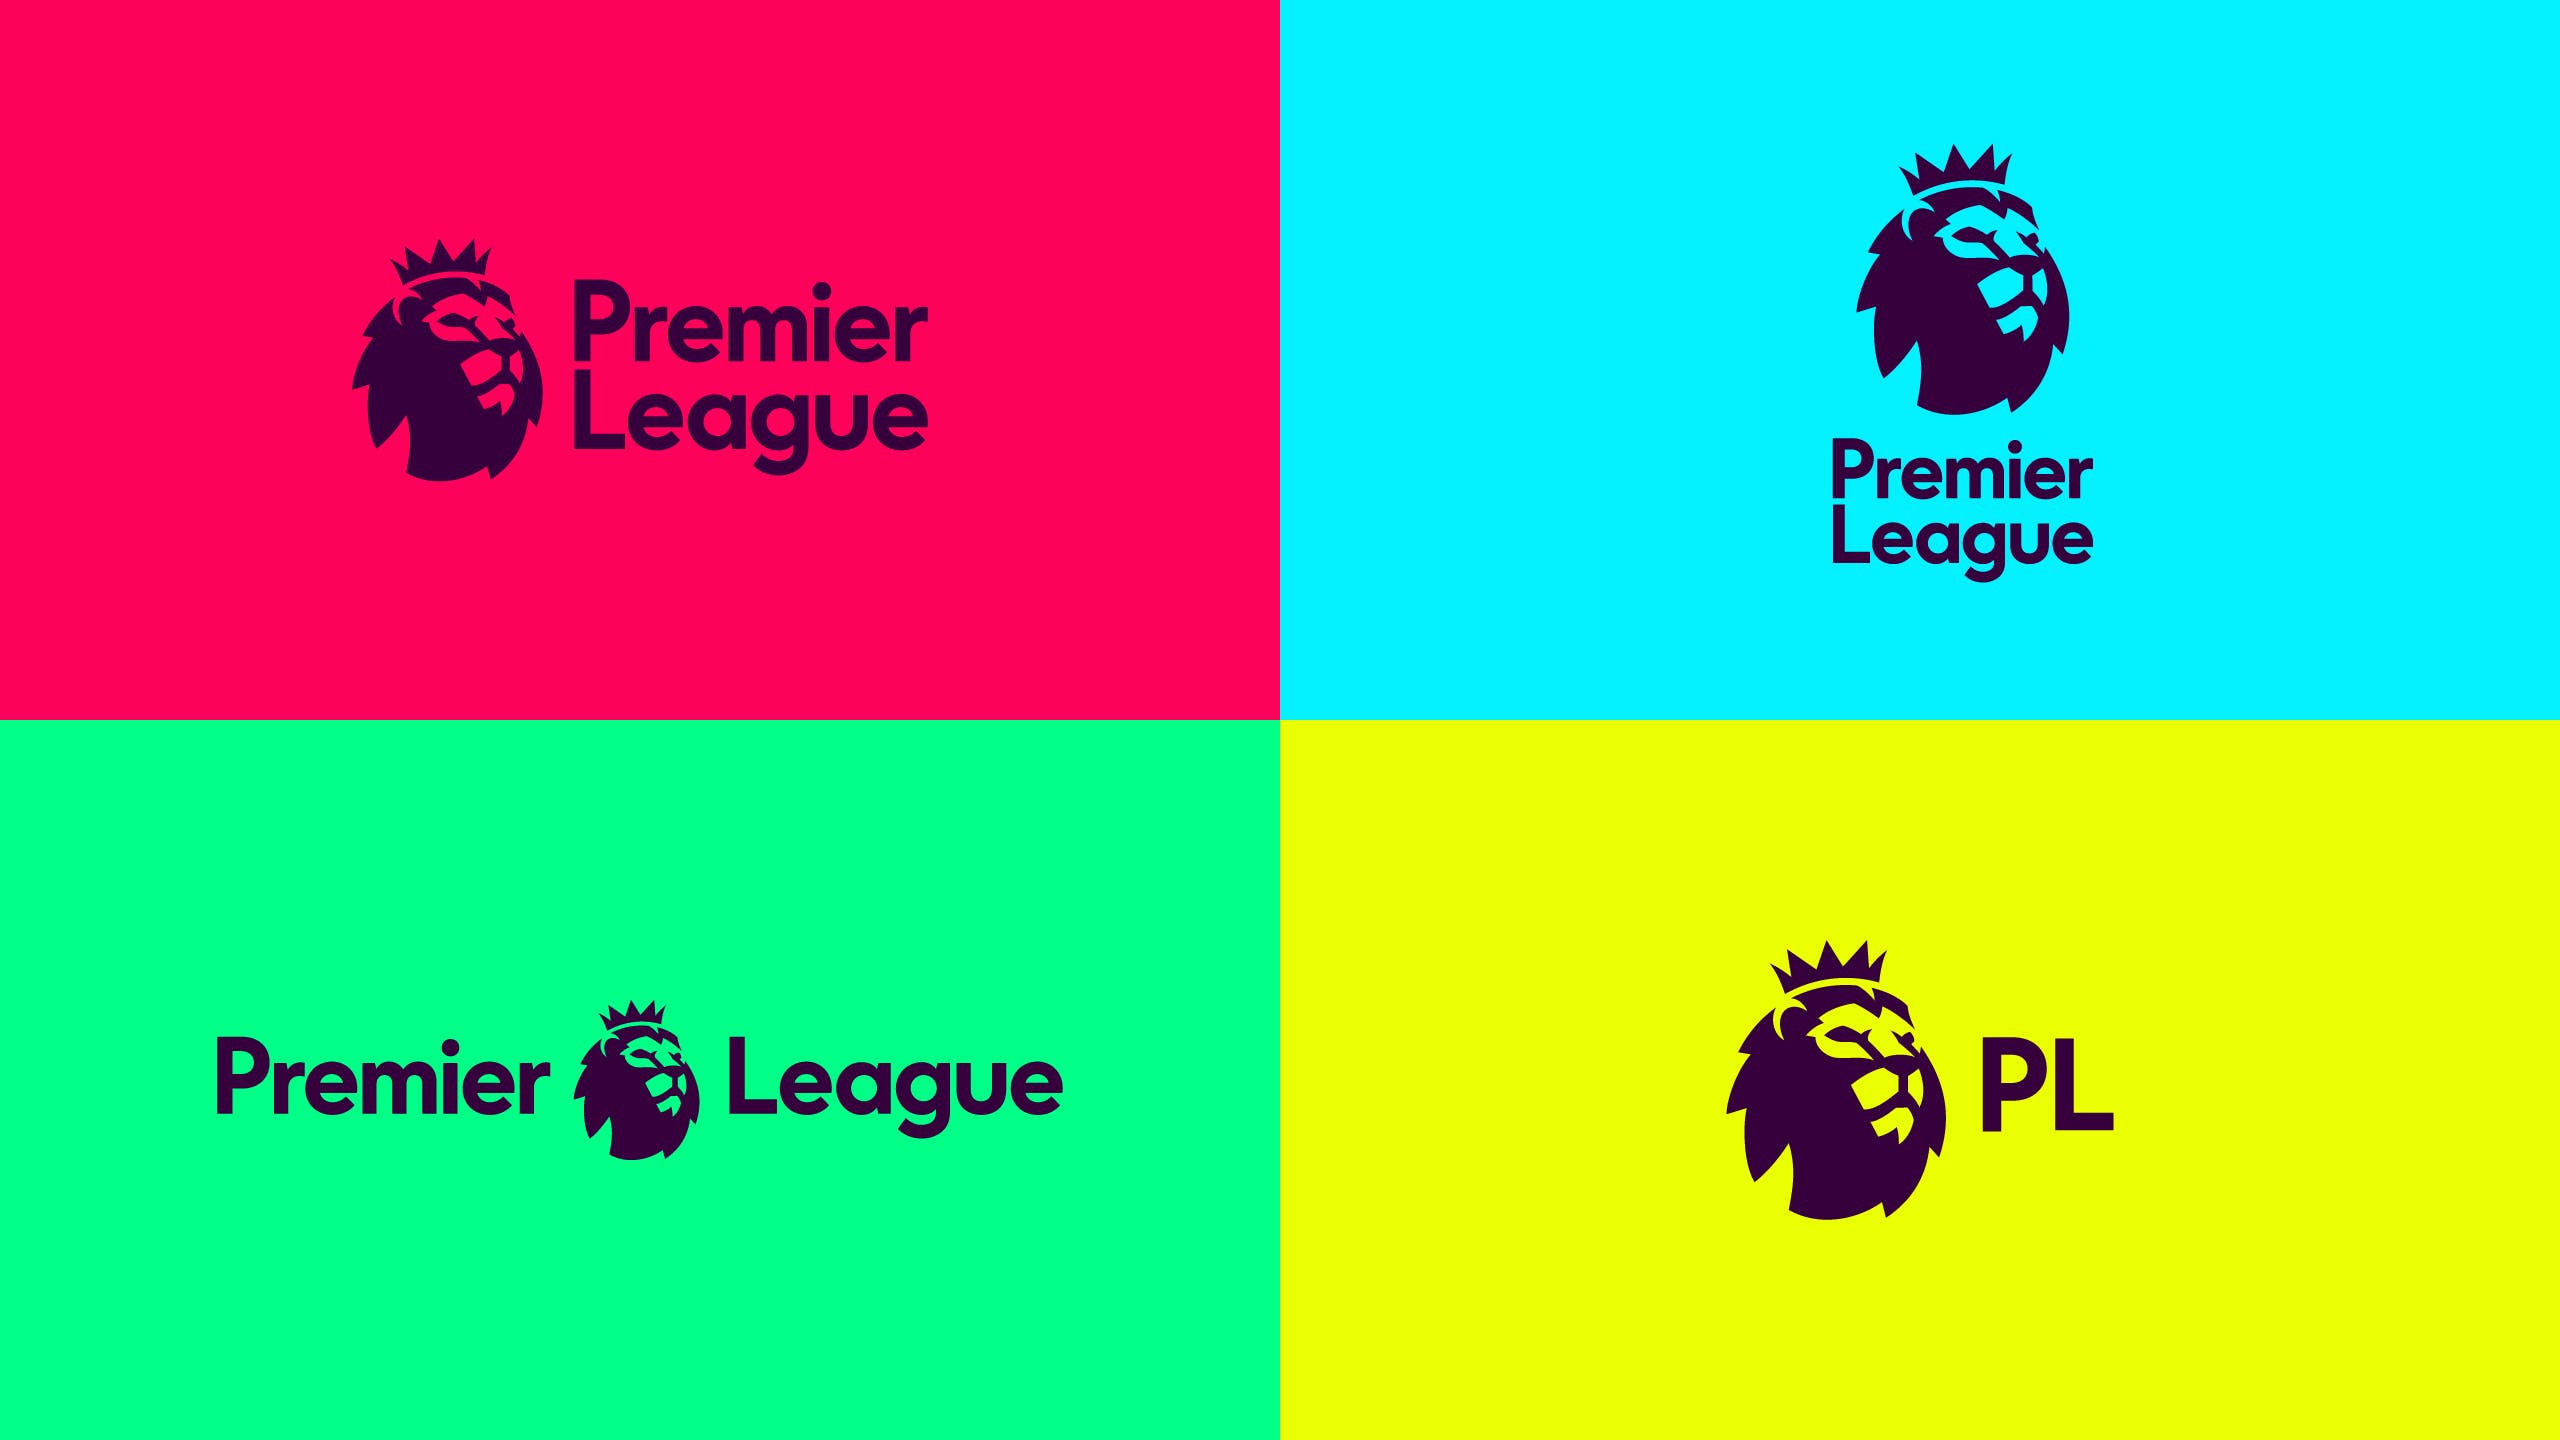 DesignSudio on designing the new Premier League logo